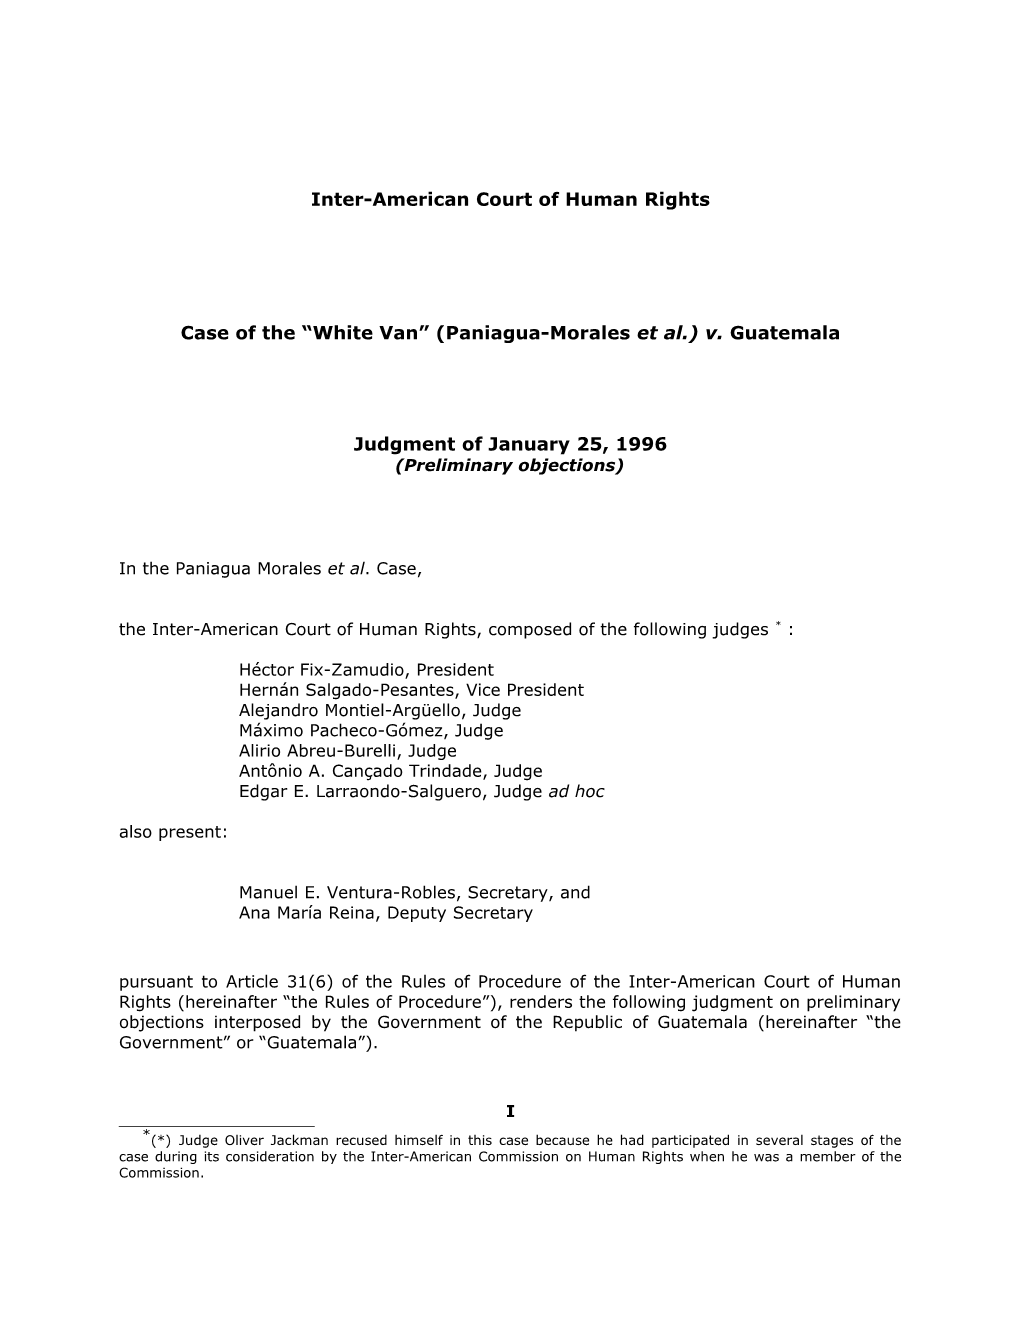 Case of the White Van (Paniagua-Morales Et Al.)V.Guatemala